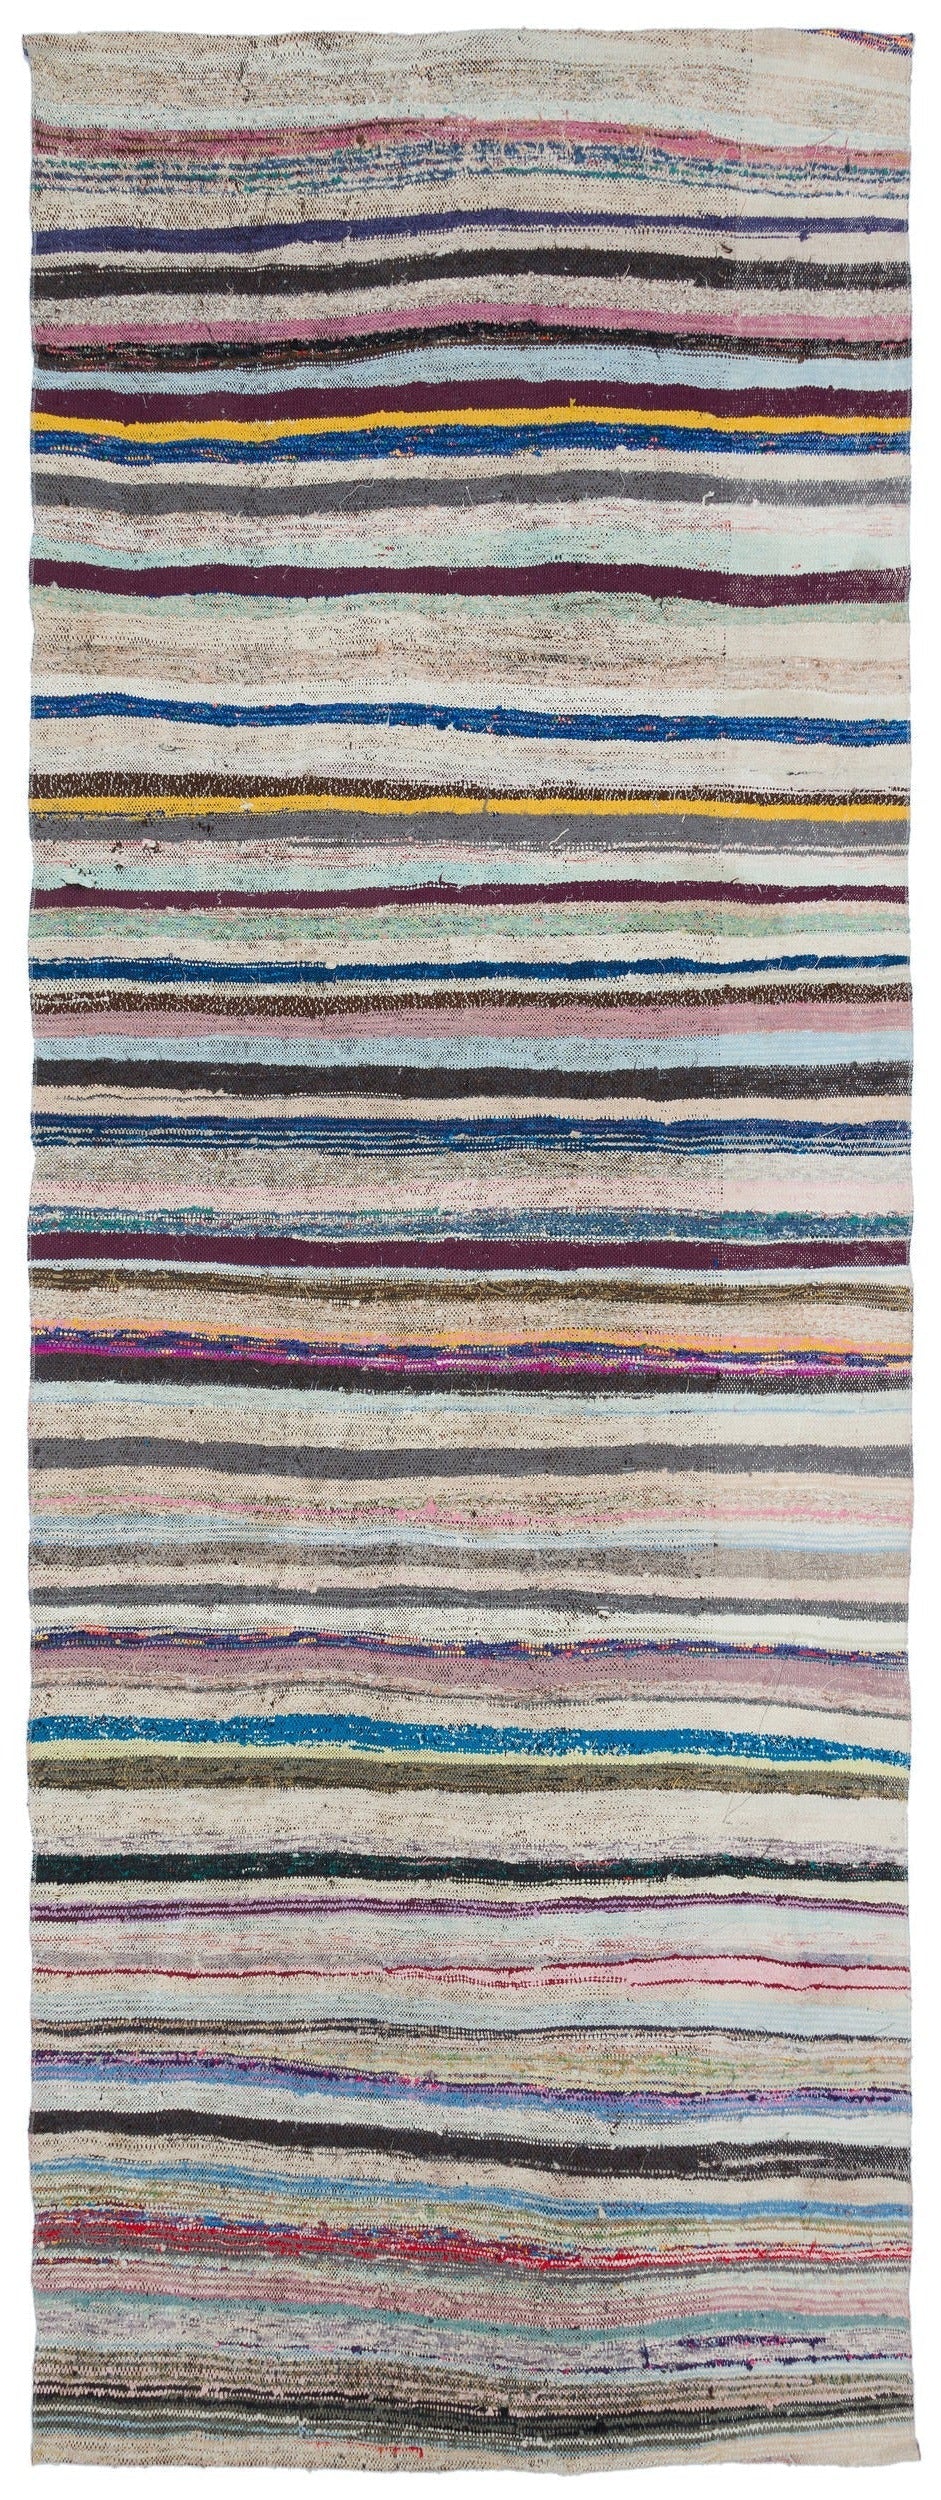 Cretan Beige Striped Wool Hand-Woven Carpet 139 x 370